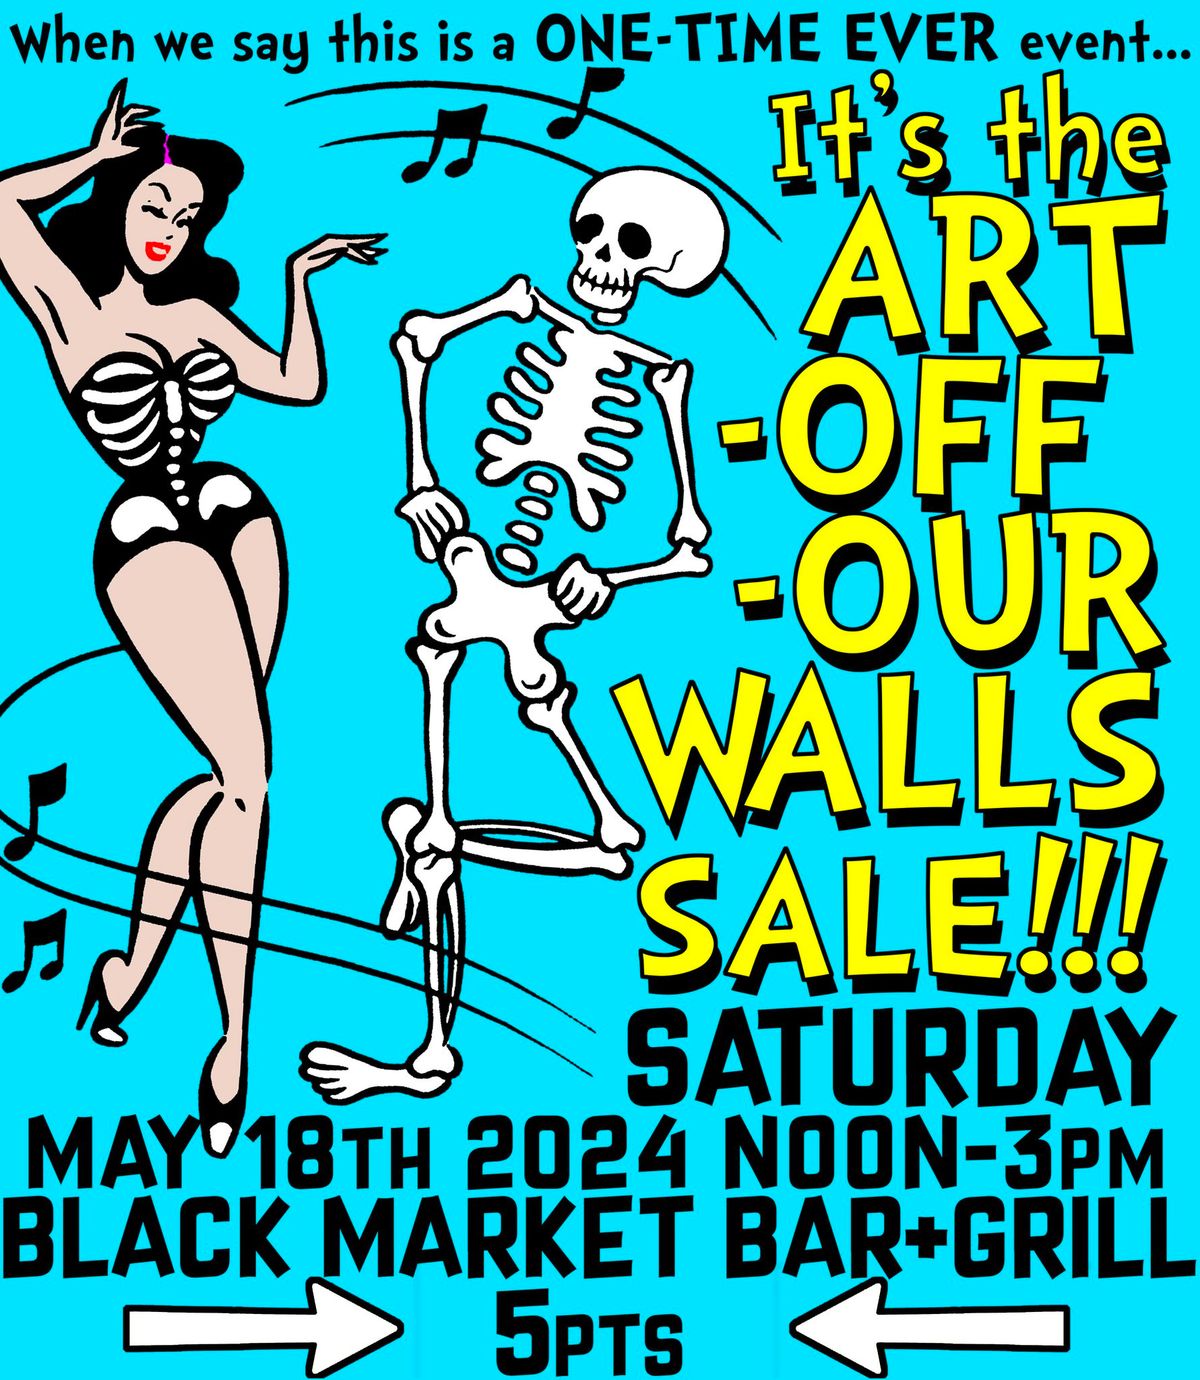 Art Off Our Walls Sale @ BMB 5pts